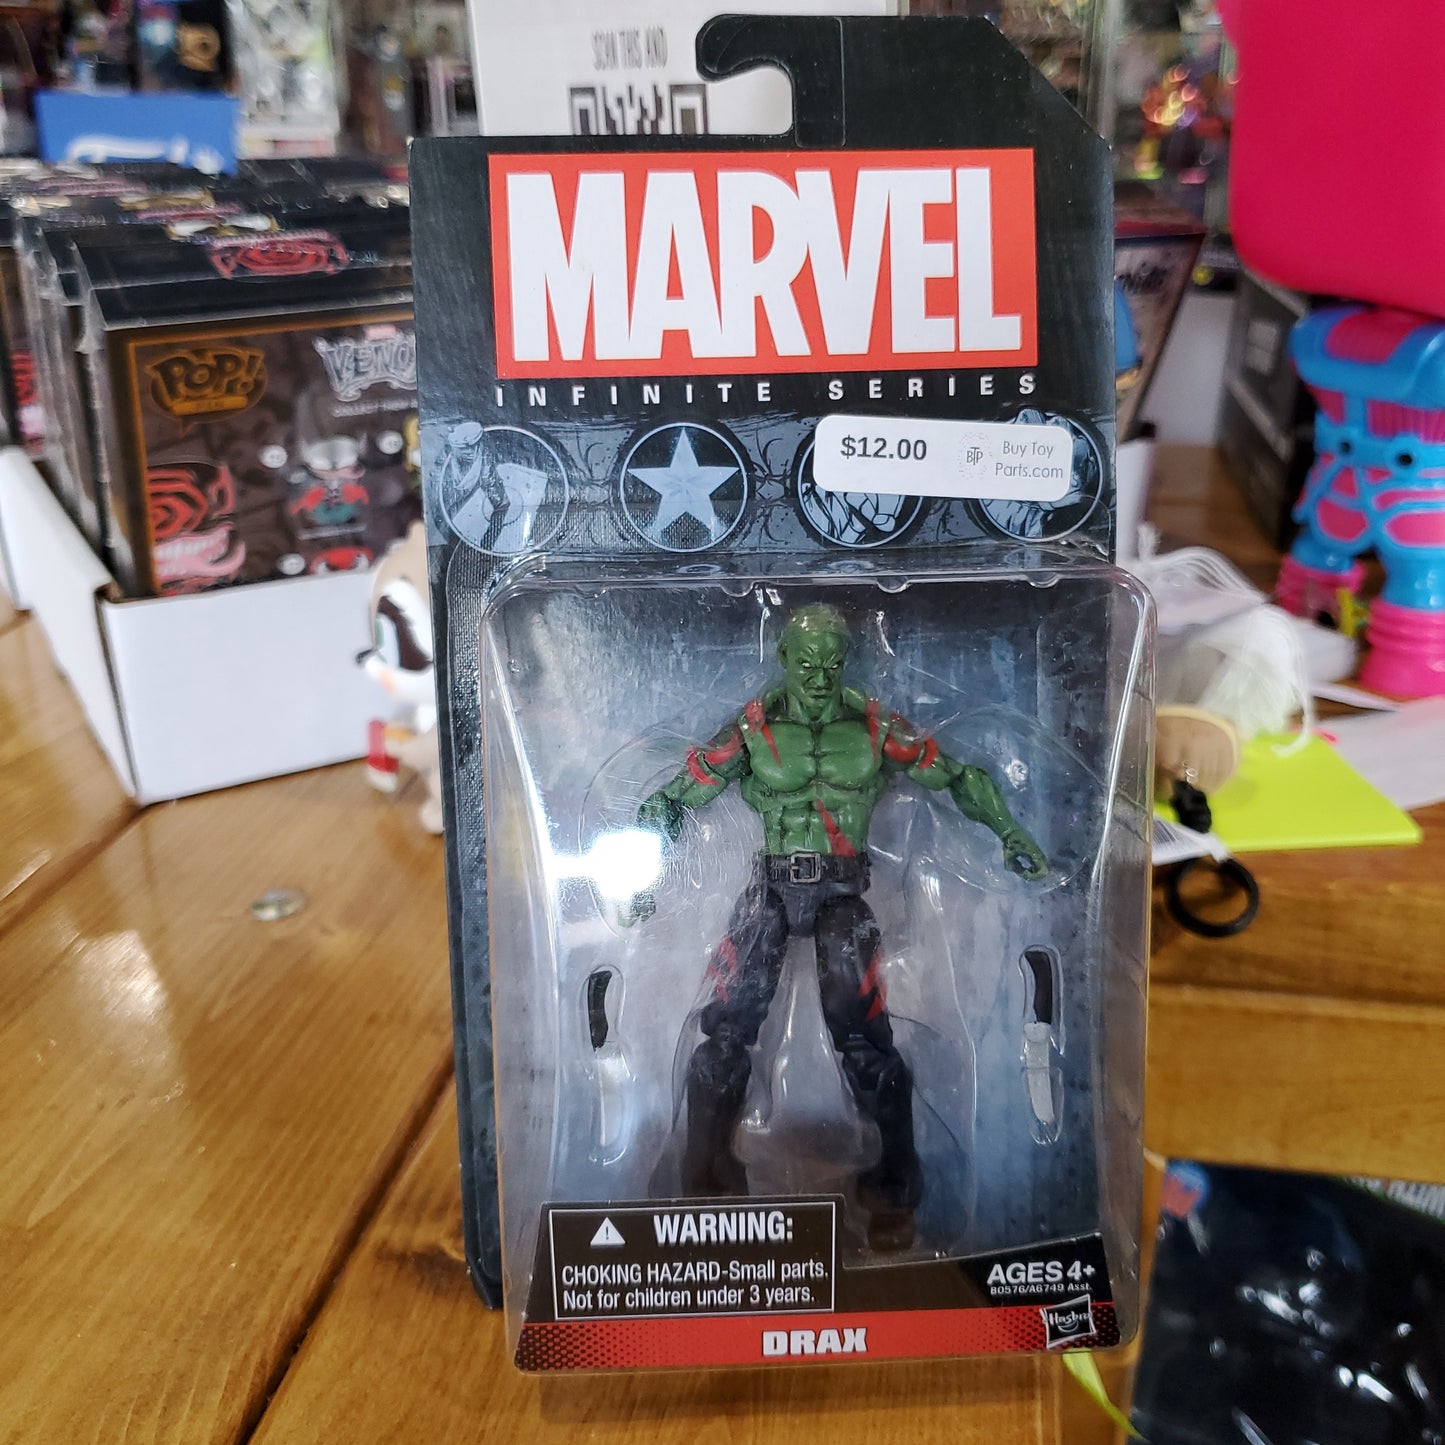 Marvel Infinite Series - Drax Action Figure by Hasbro